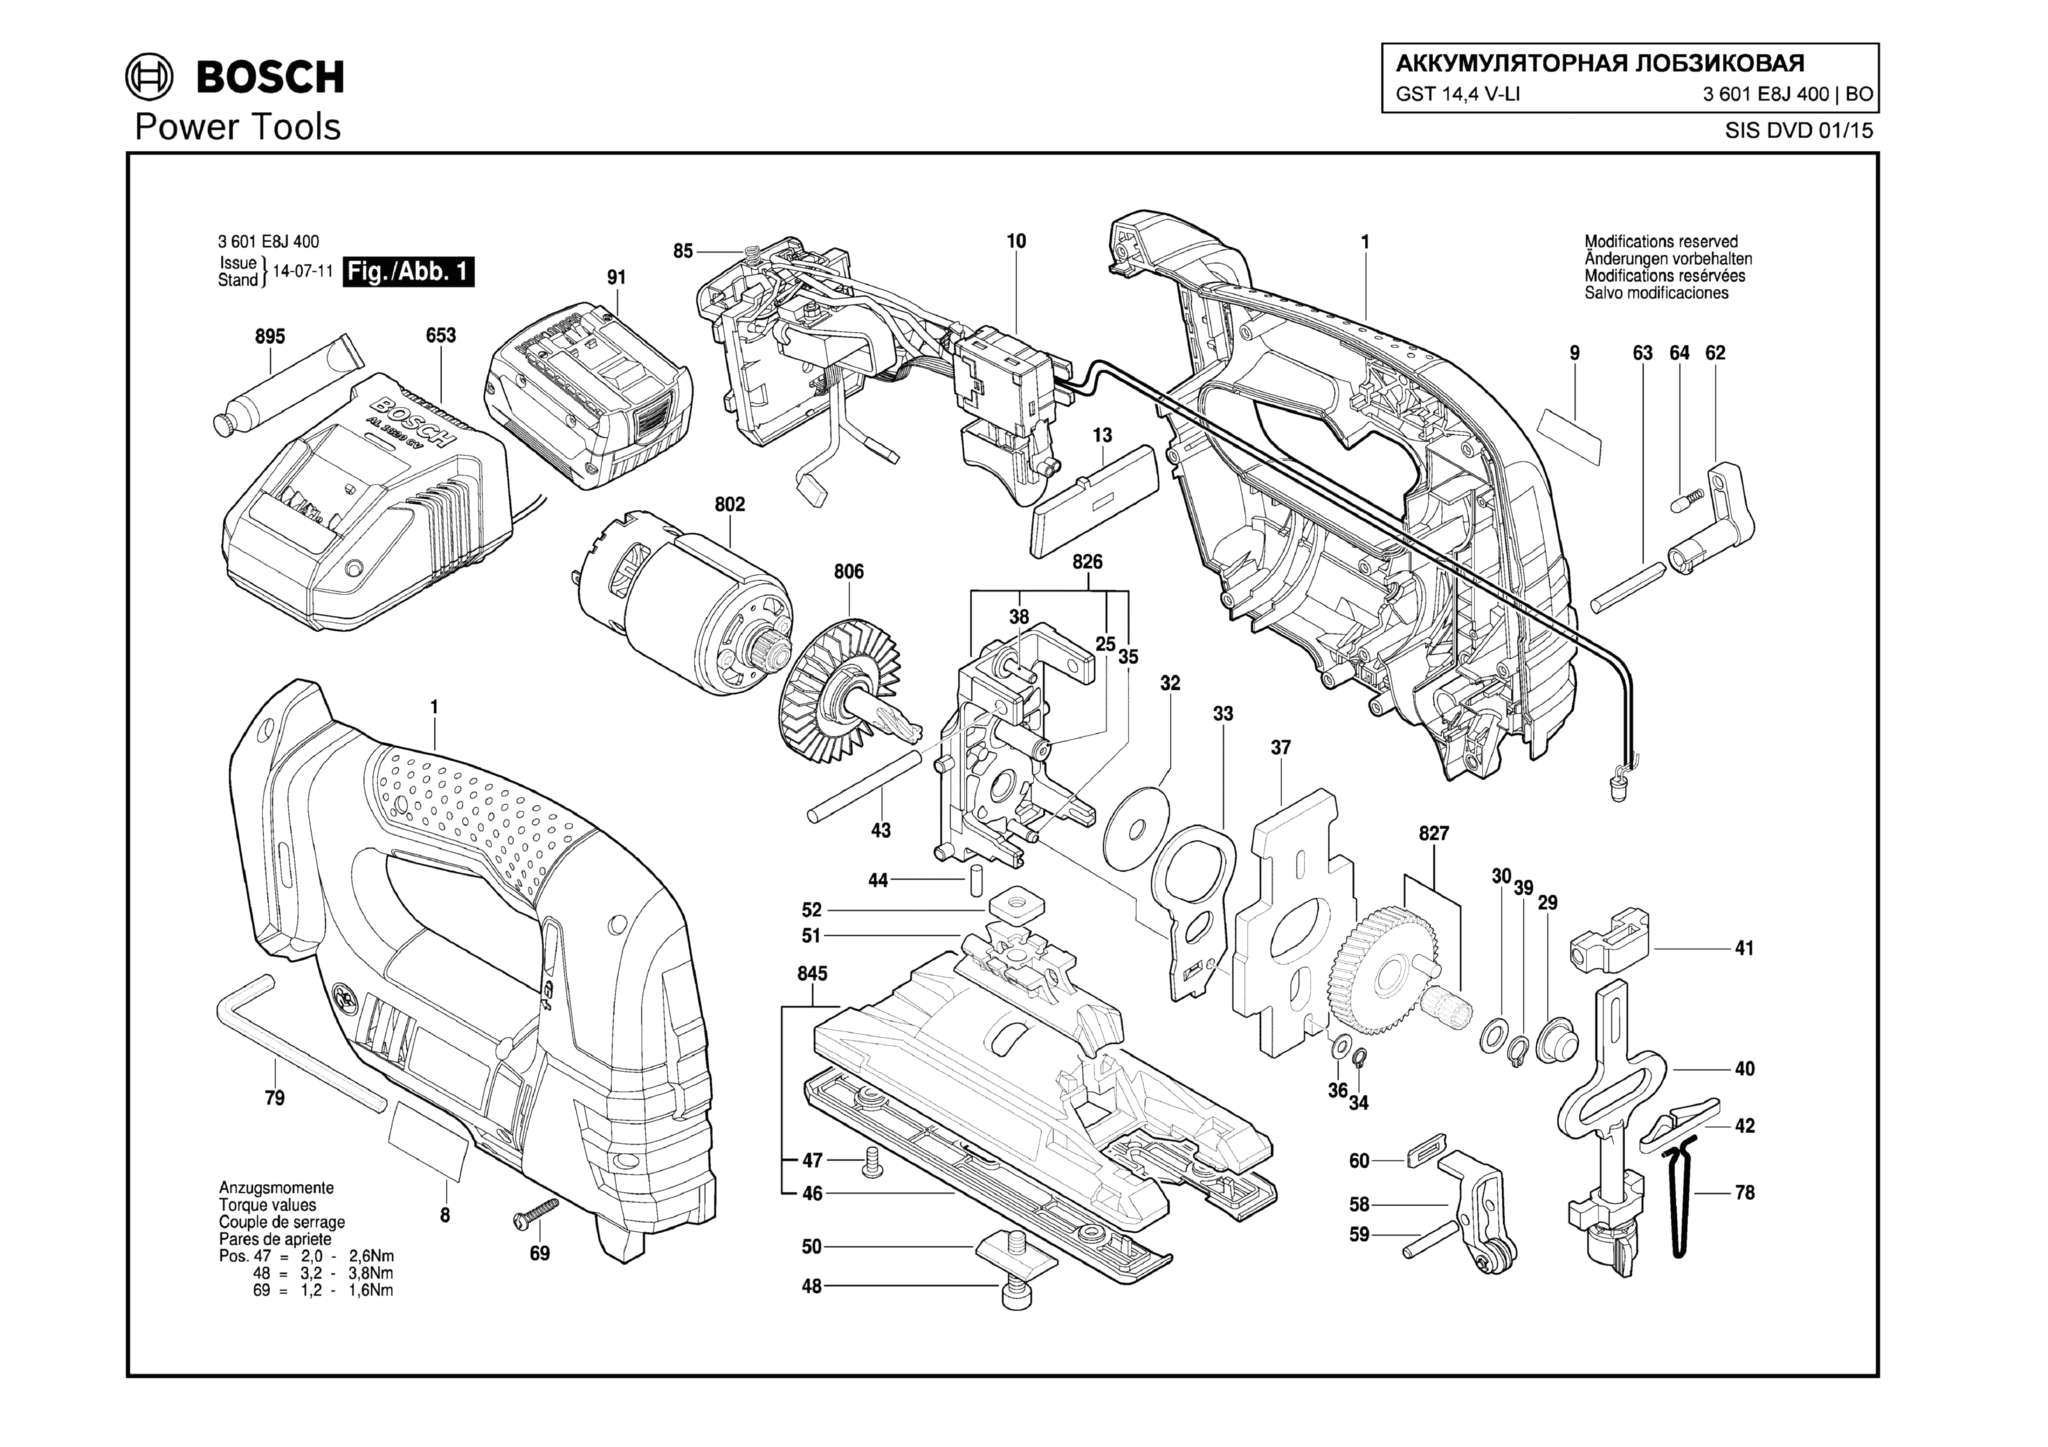 Запчасти, схема и деталировка Bosch GST 14,4 V-LI (ТИП 3601E8J400)